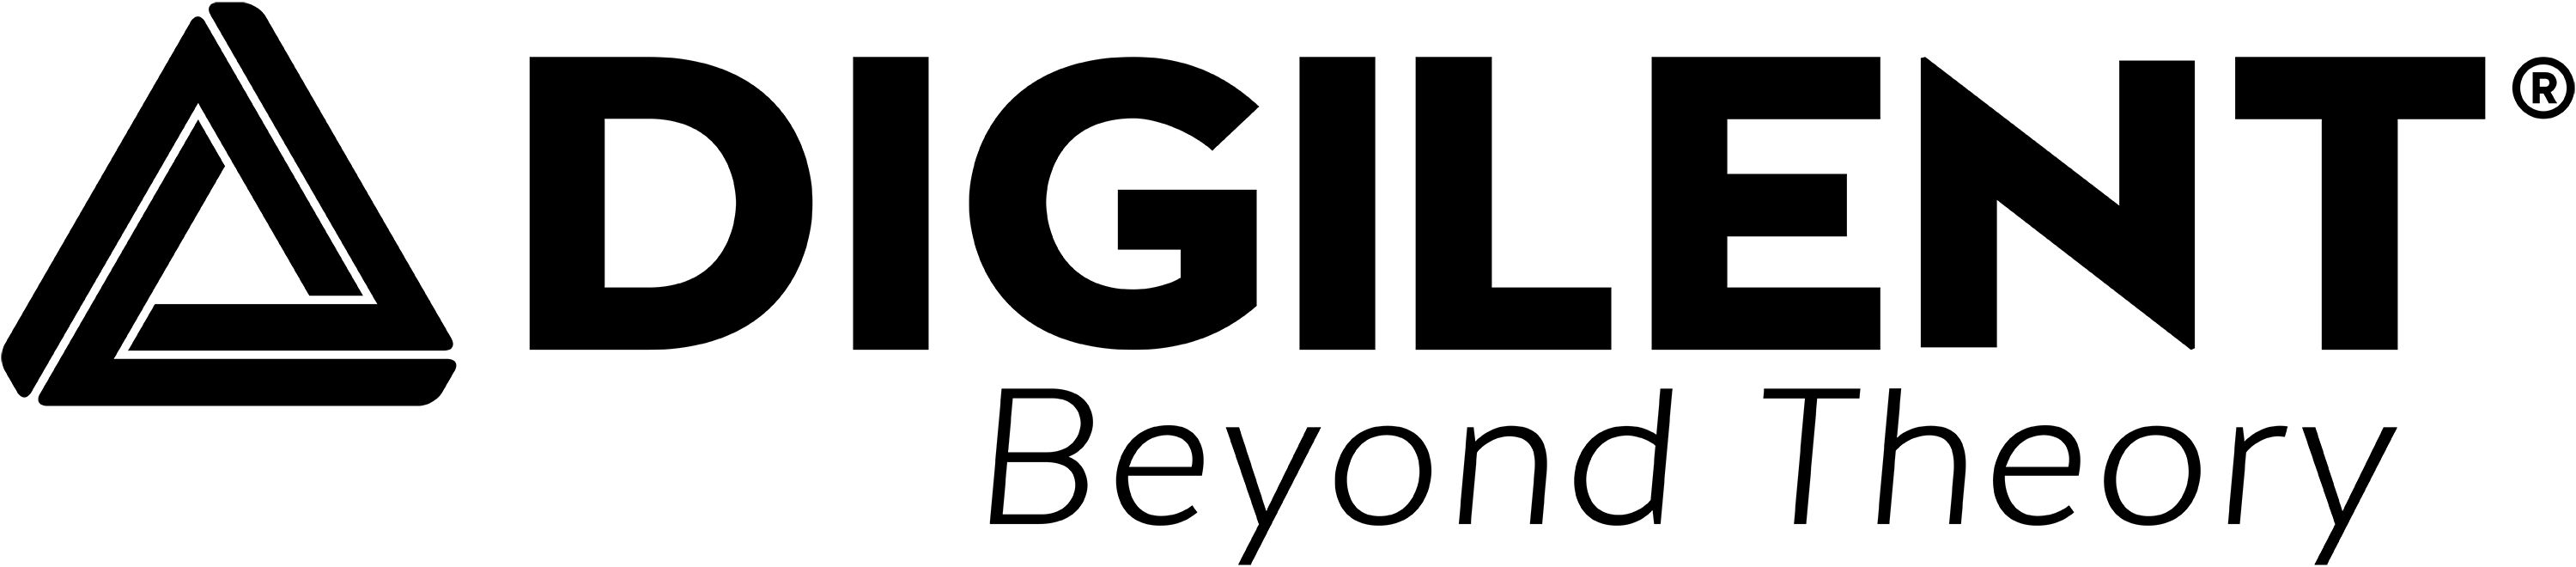 digilent-logo_motto-black-3000.png